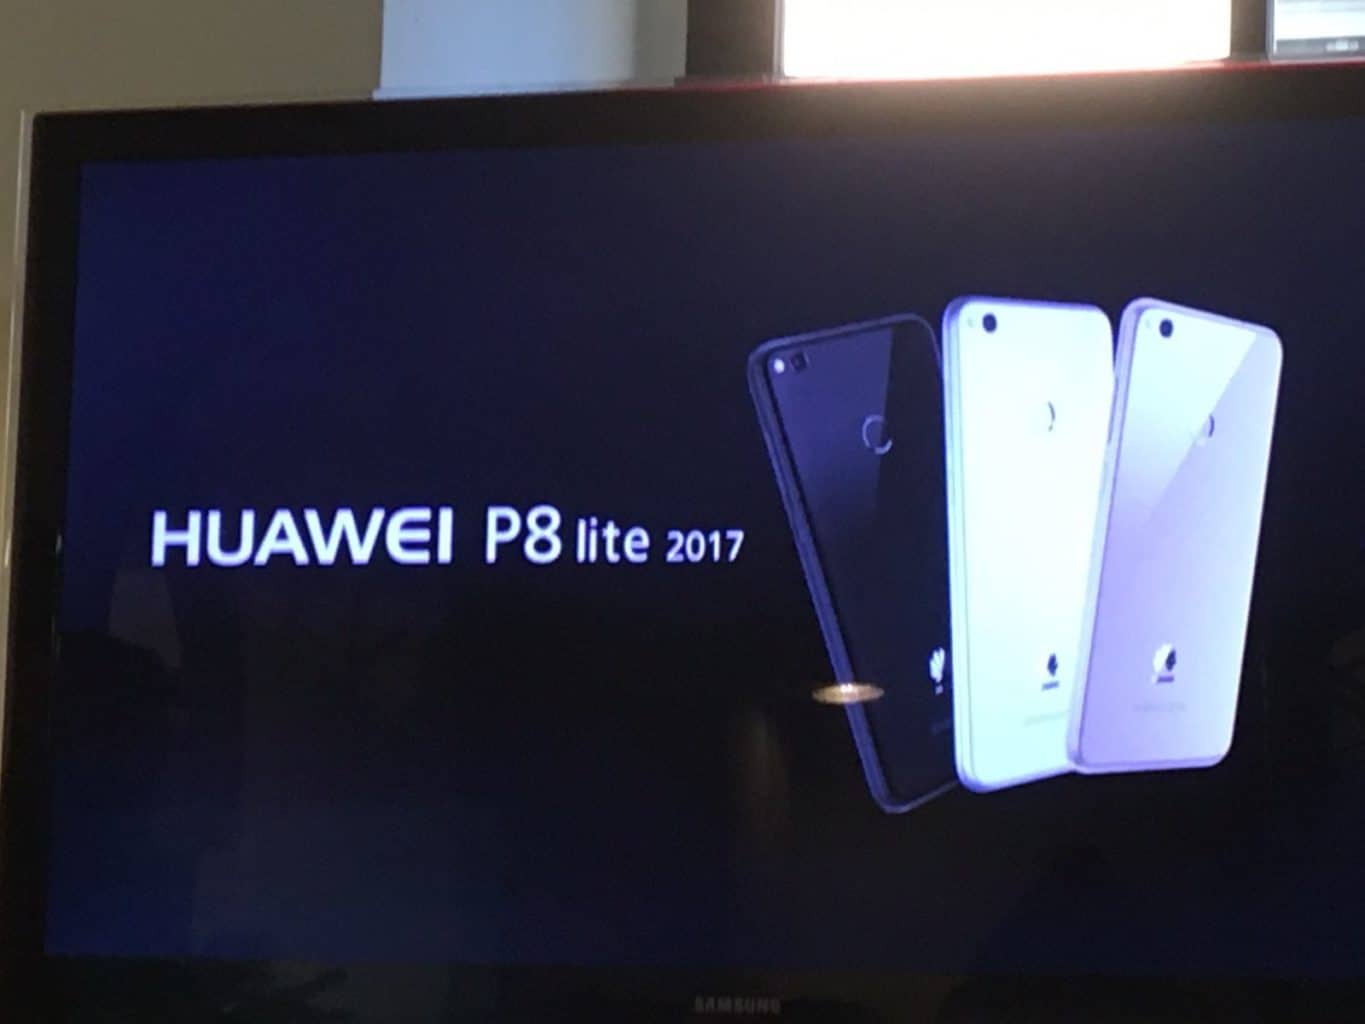 Huawei P8 Lite 2017 lanciato oggi a Milano!